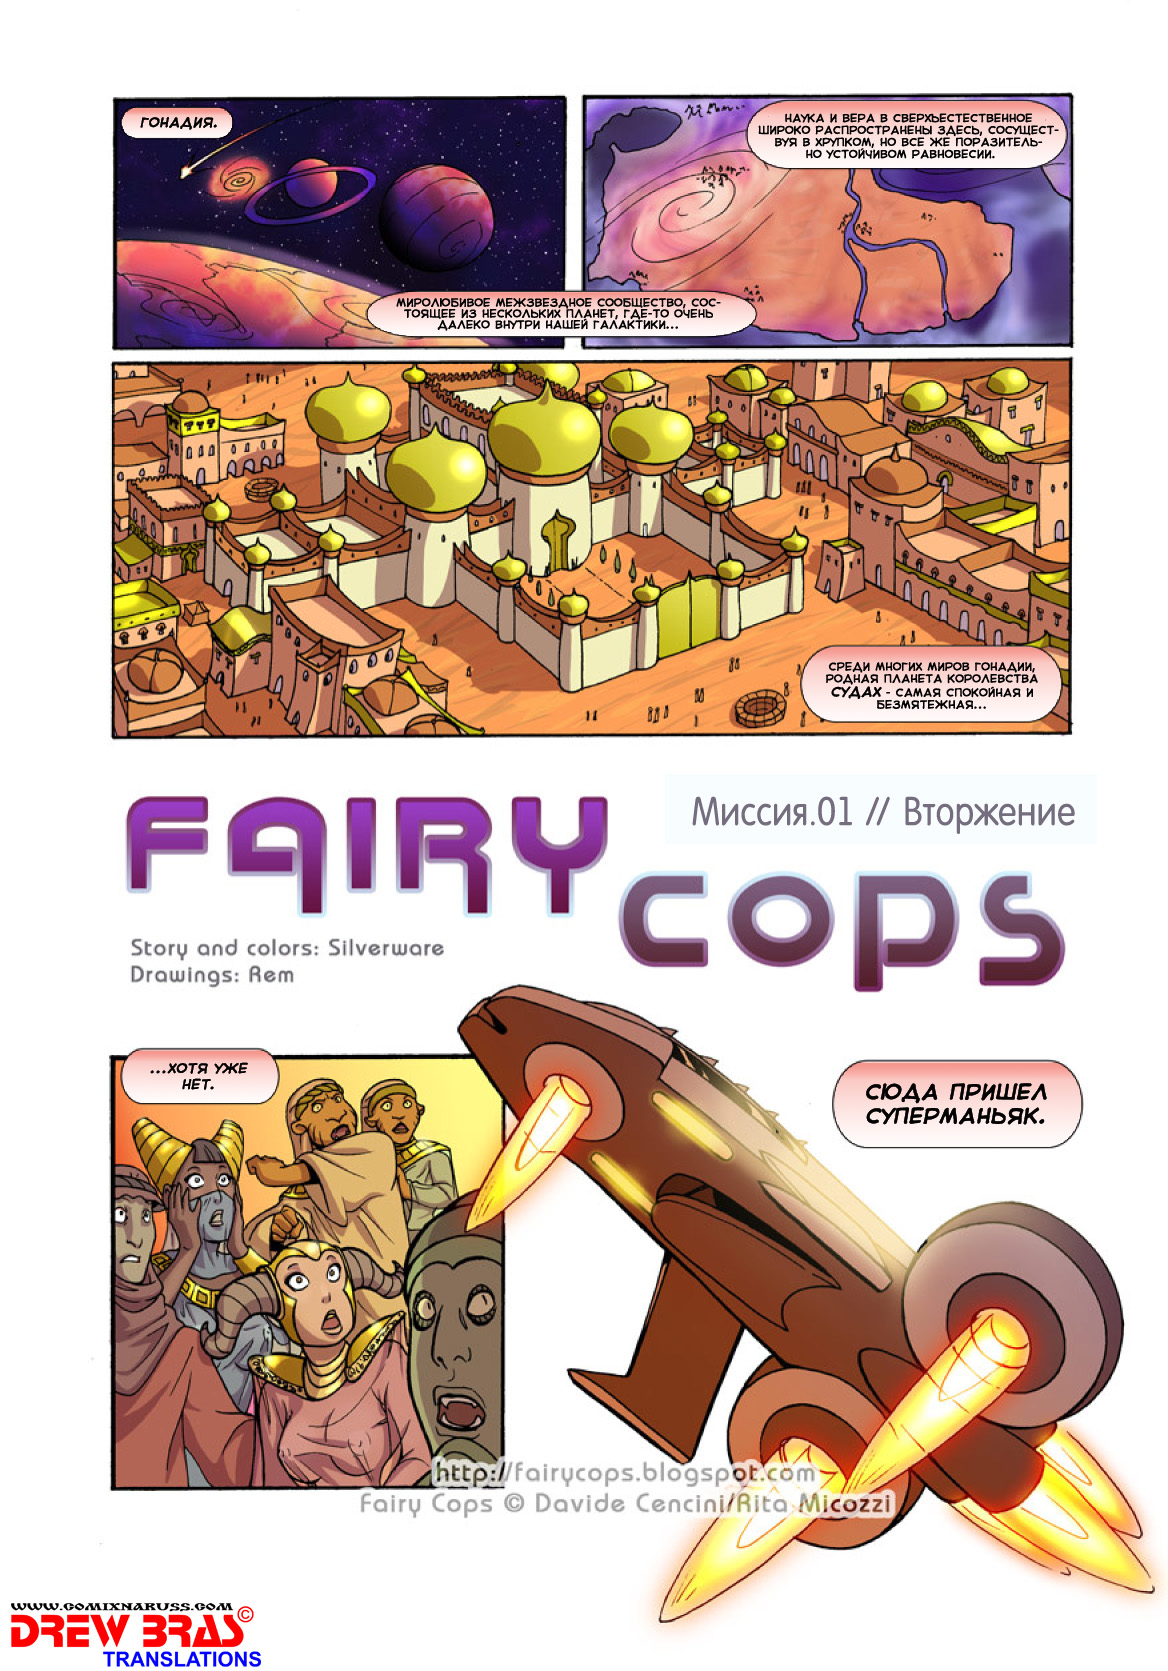 Fairy Cops - Mission.01 - Invasion